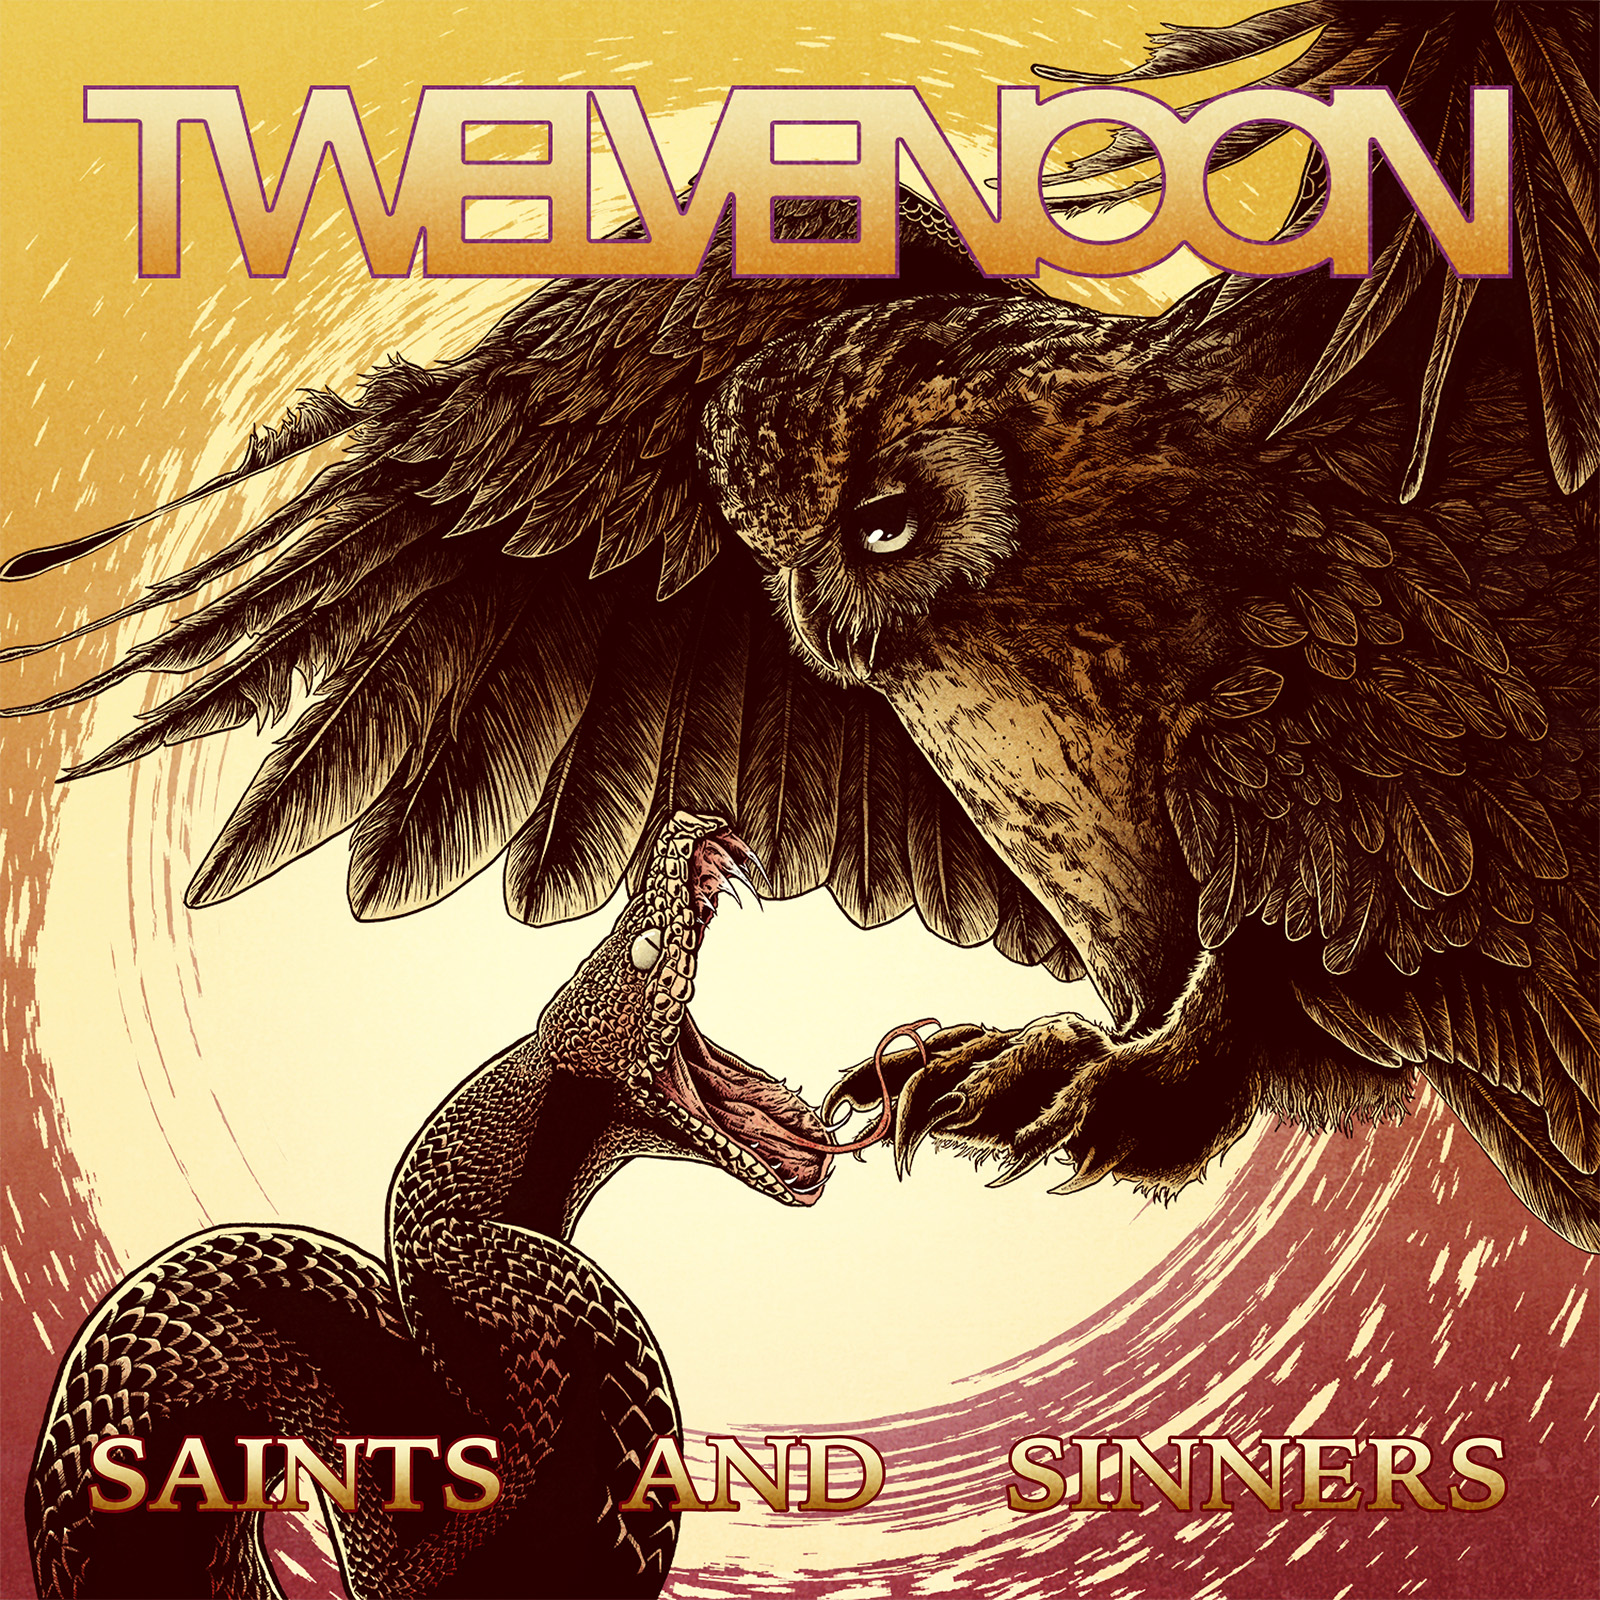 Saints-and-Sinners-Twelve-Noon-cover-art-1600